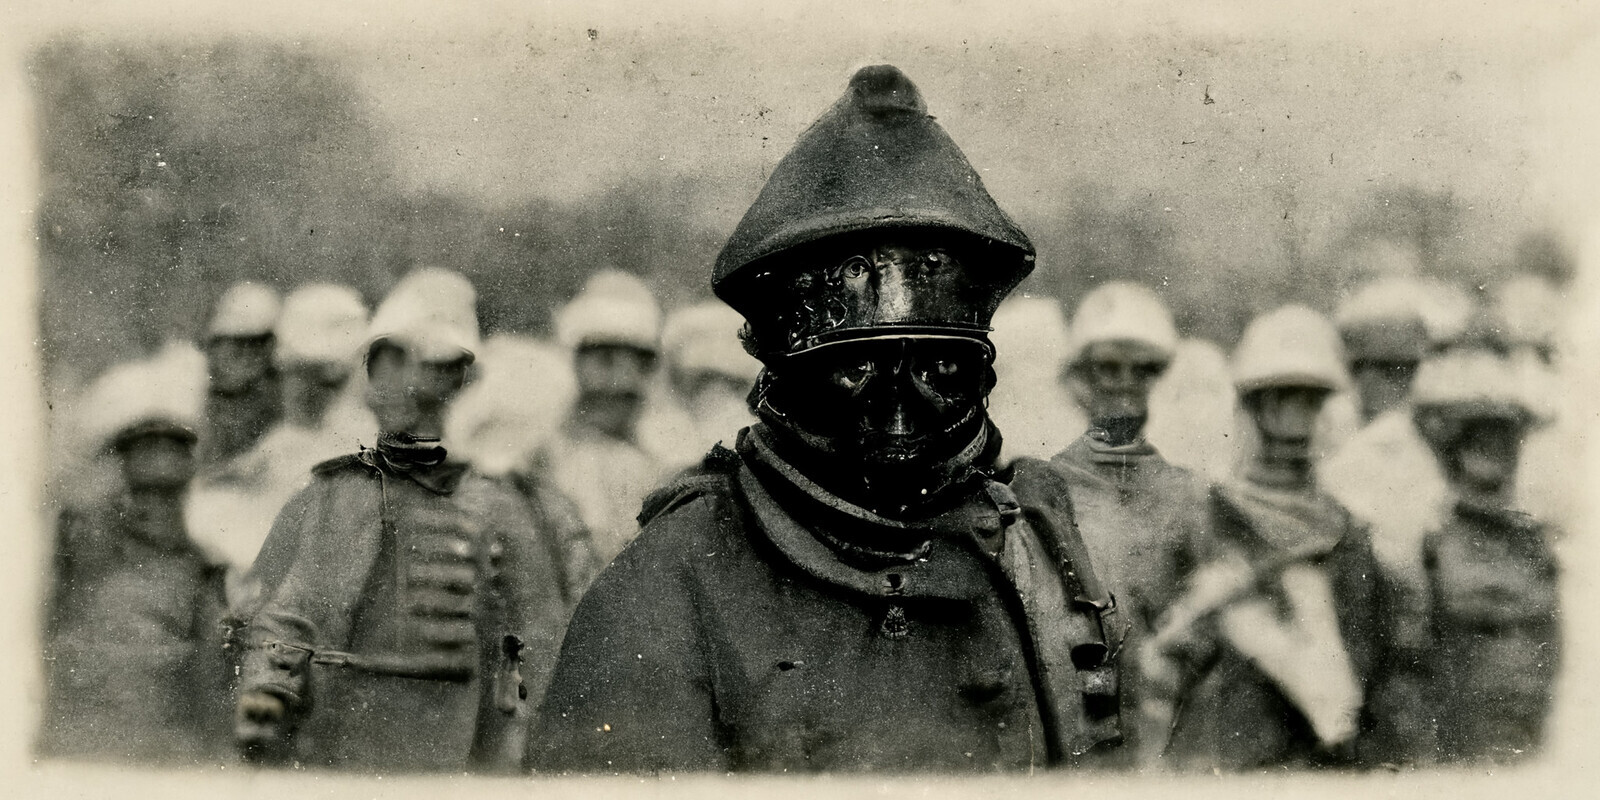 The Truthkeeper Militia
c.1886
Photograph